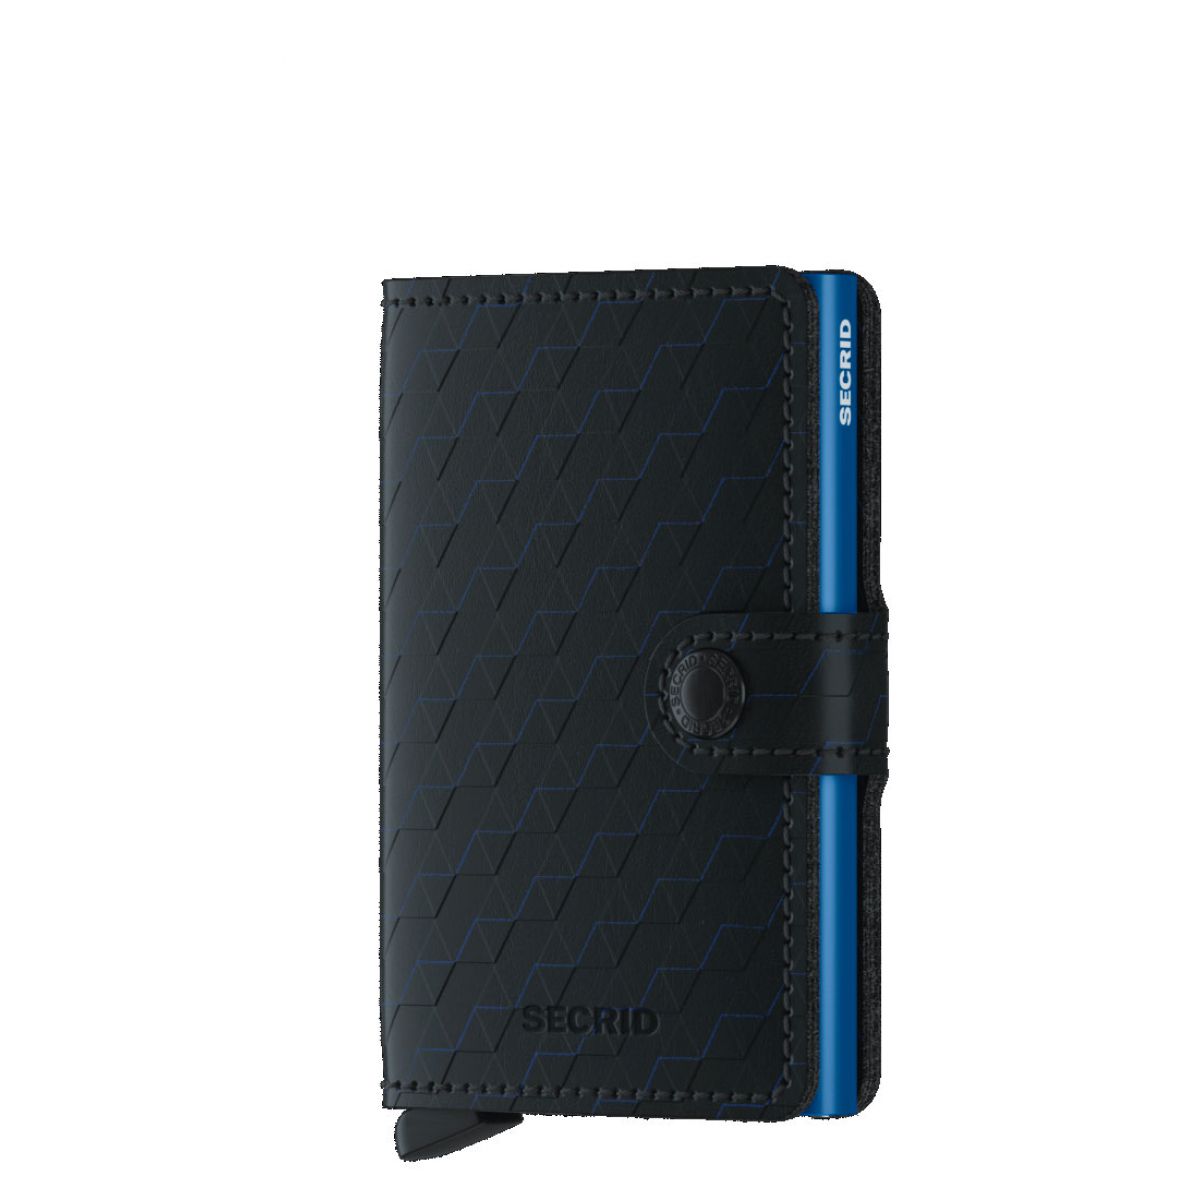 verlamming niettemin IJver Secrid mini wallet leather optical black - MOP-black - 45,41€